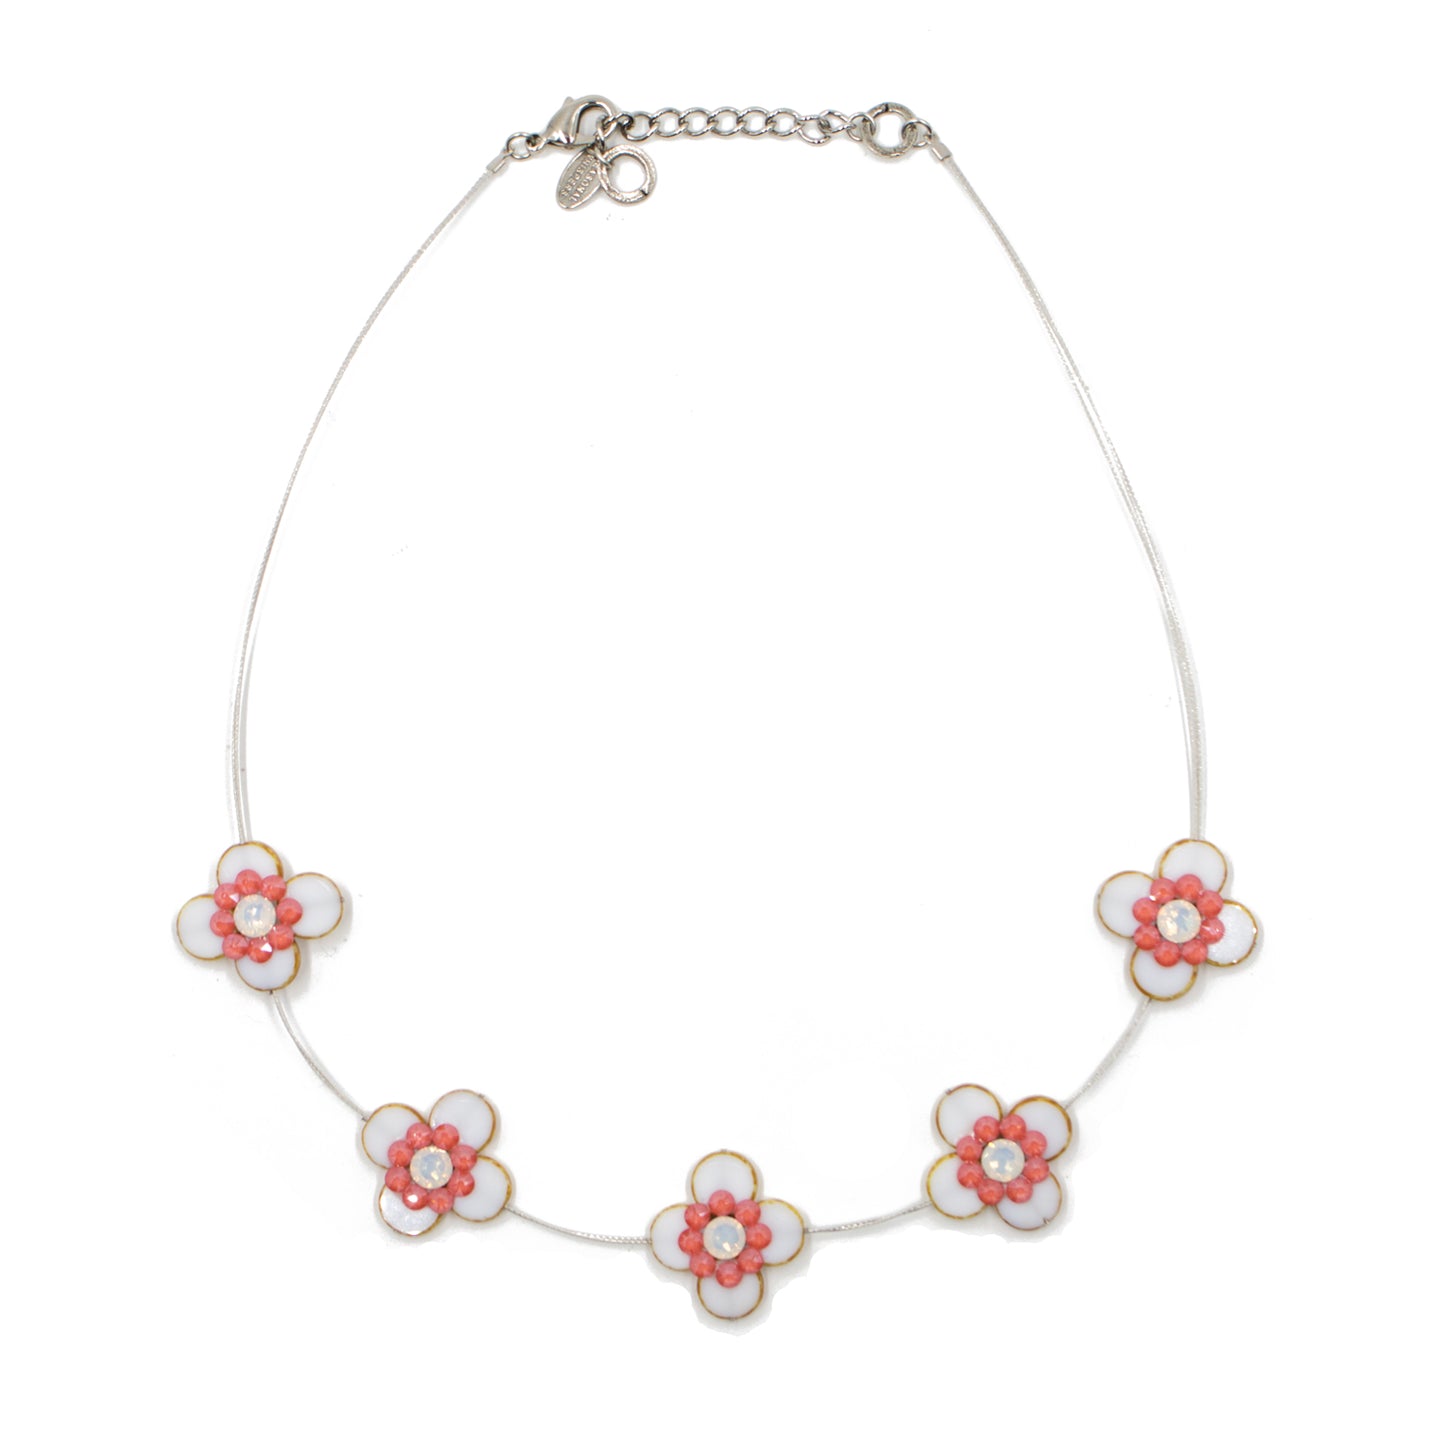 Romantic Floral Necklace 8484: White/ Silver